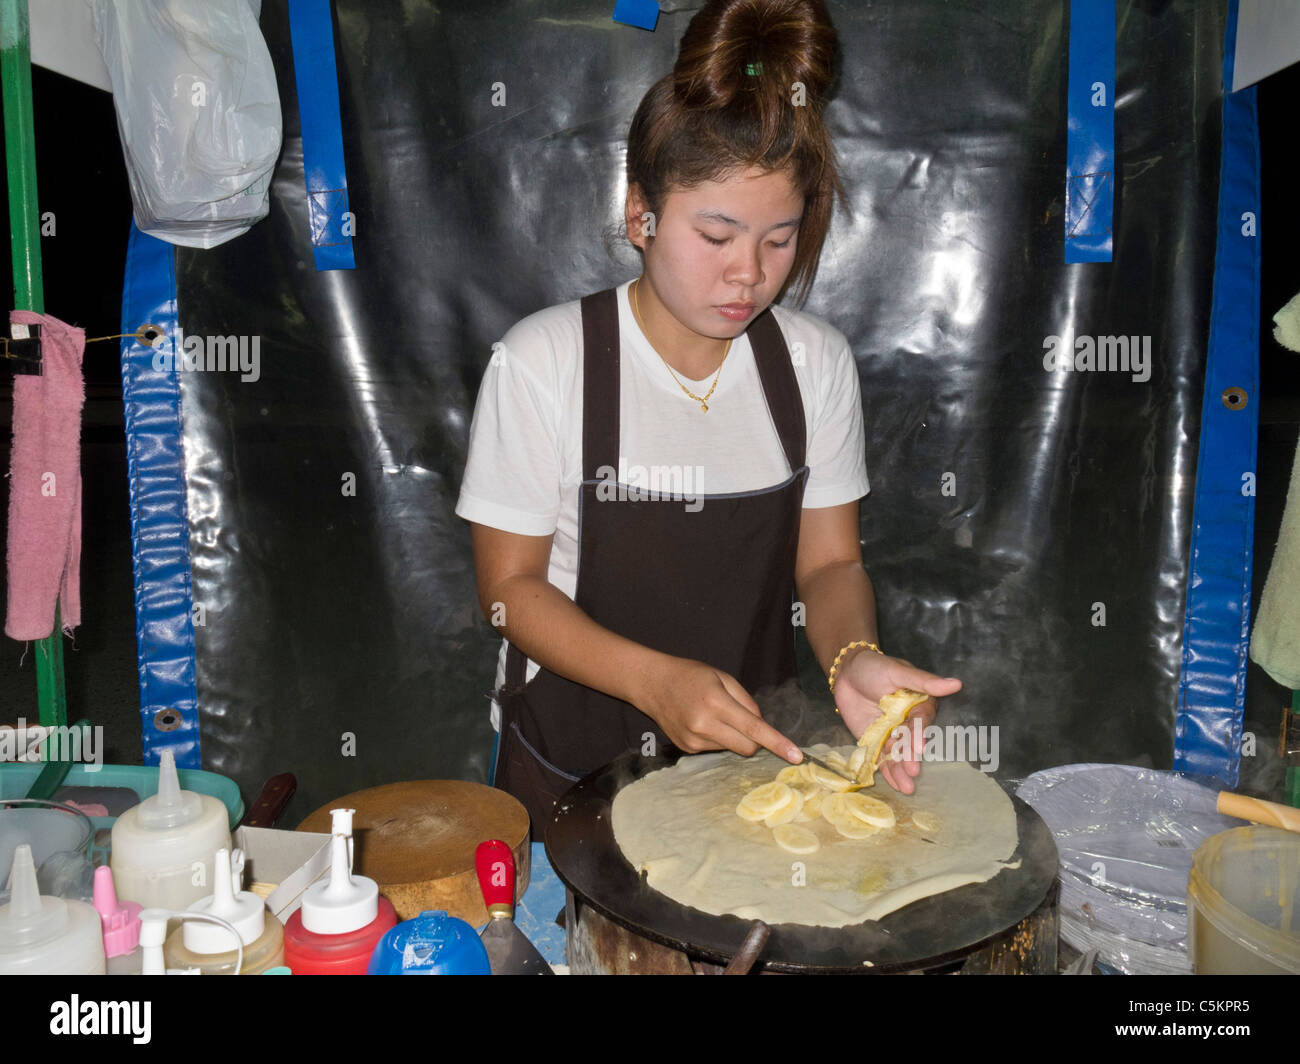 PHUKETT, THAILAND - JUN 9 2011:Roadside food vendor making crepes in Phuket, Thailand on June 9, 2011. Stock Photo